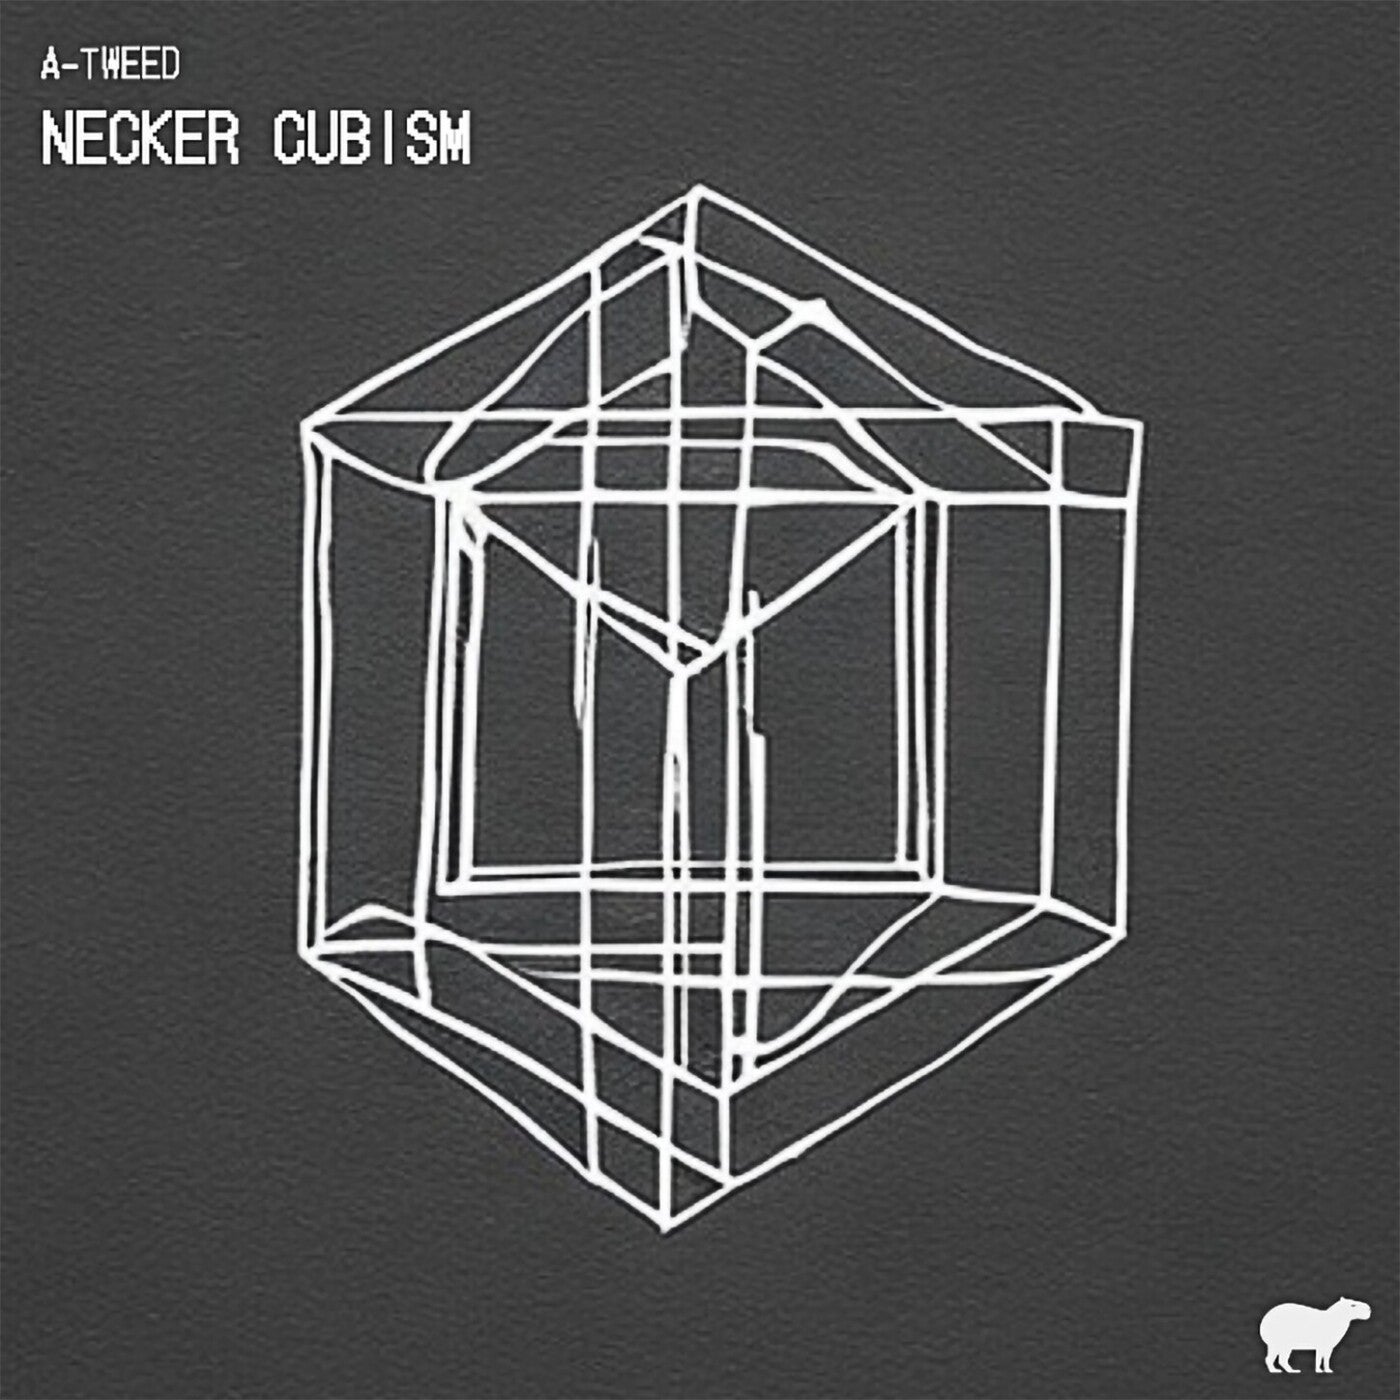 Necker Cubism